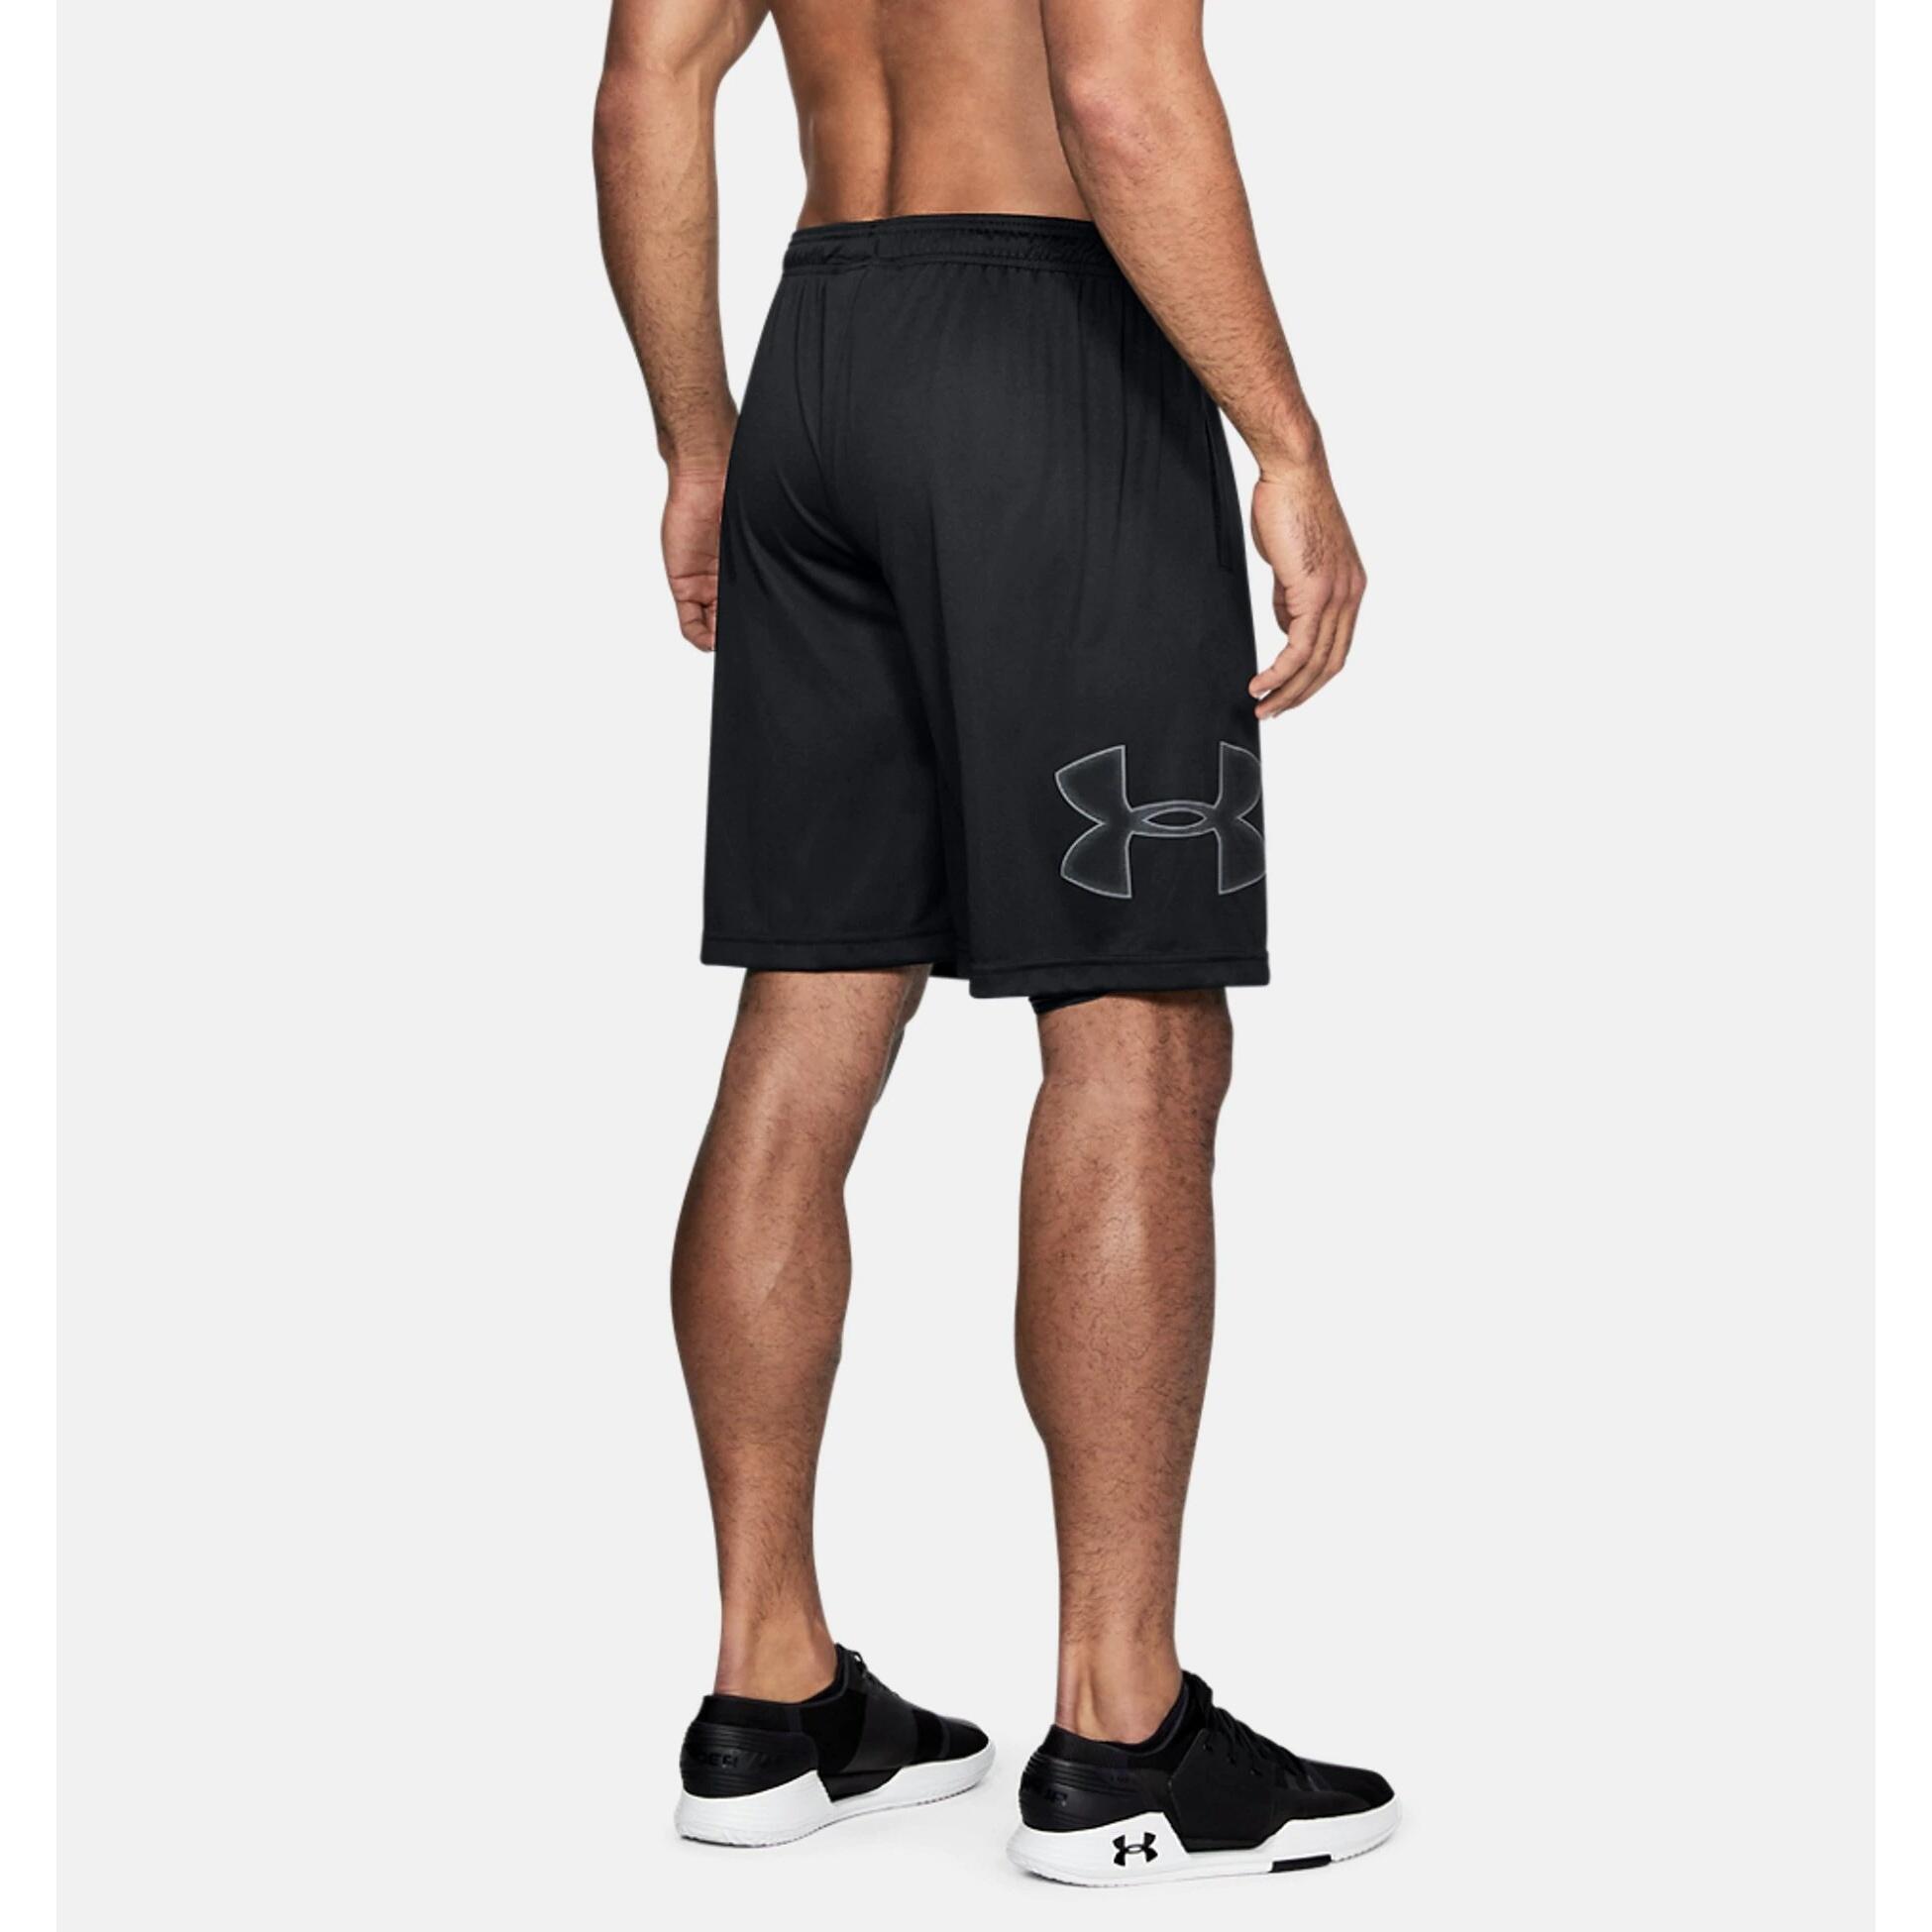 Mens Tech Shorts (Black/Light Graphite) 4/4